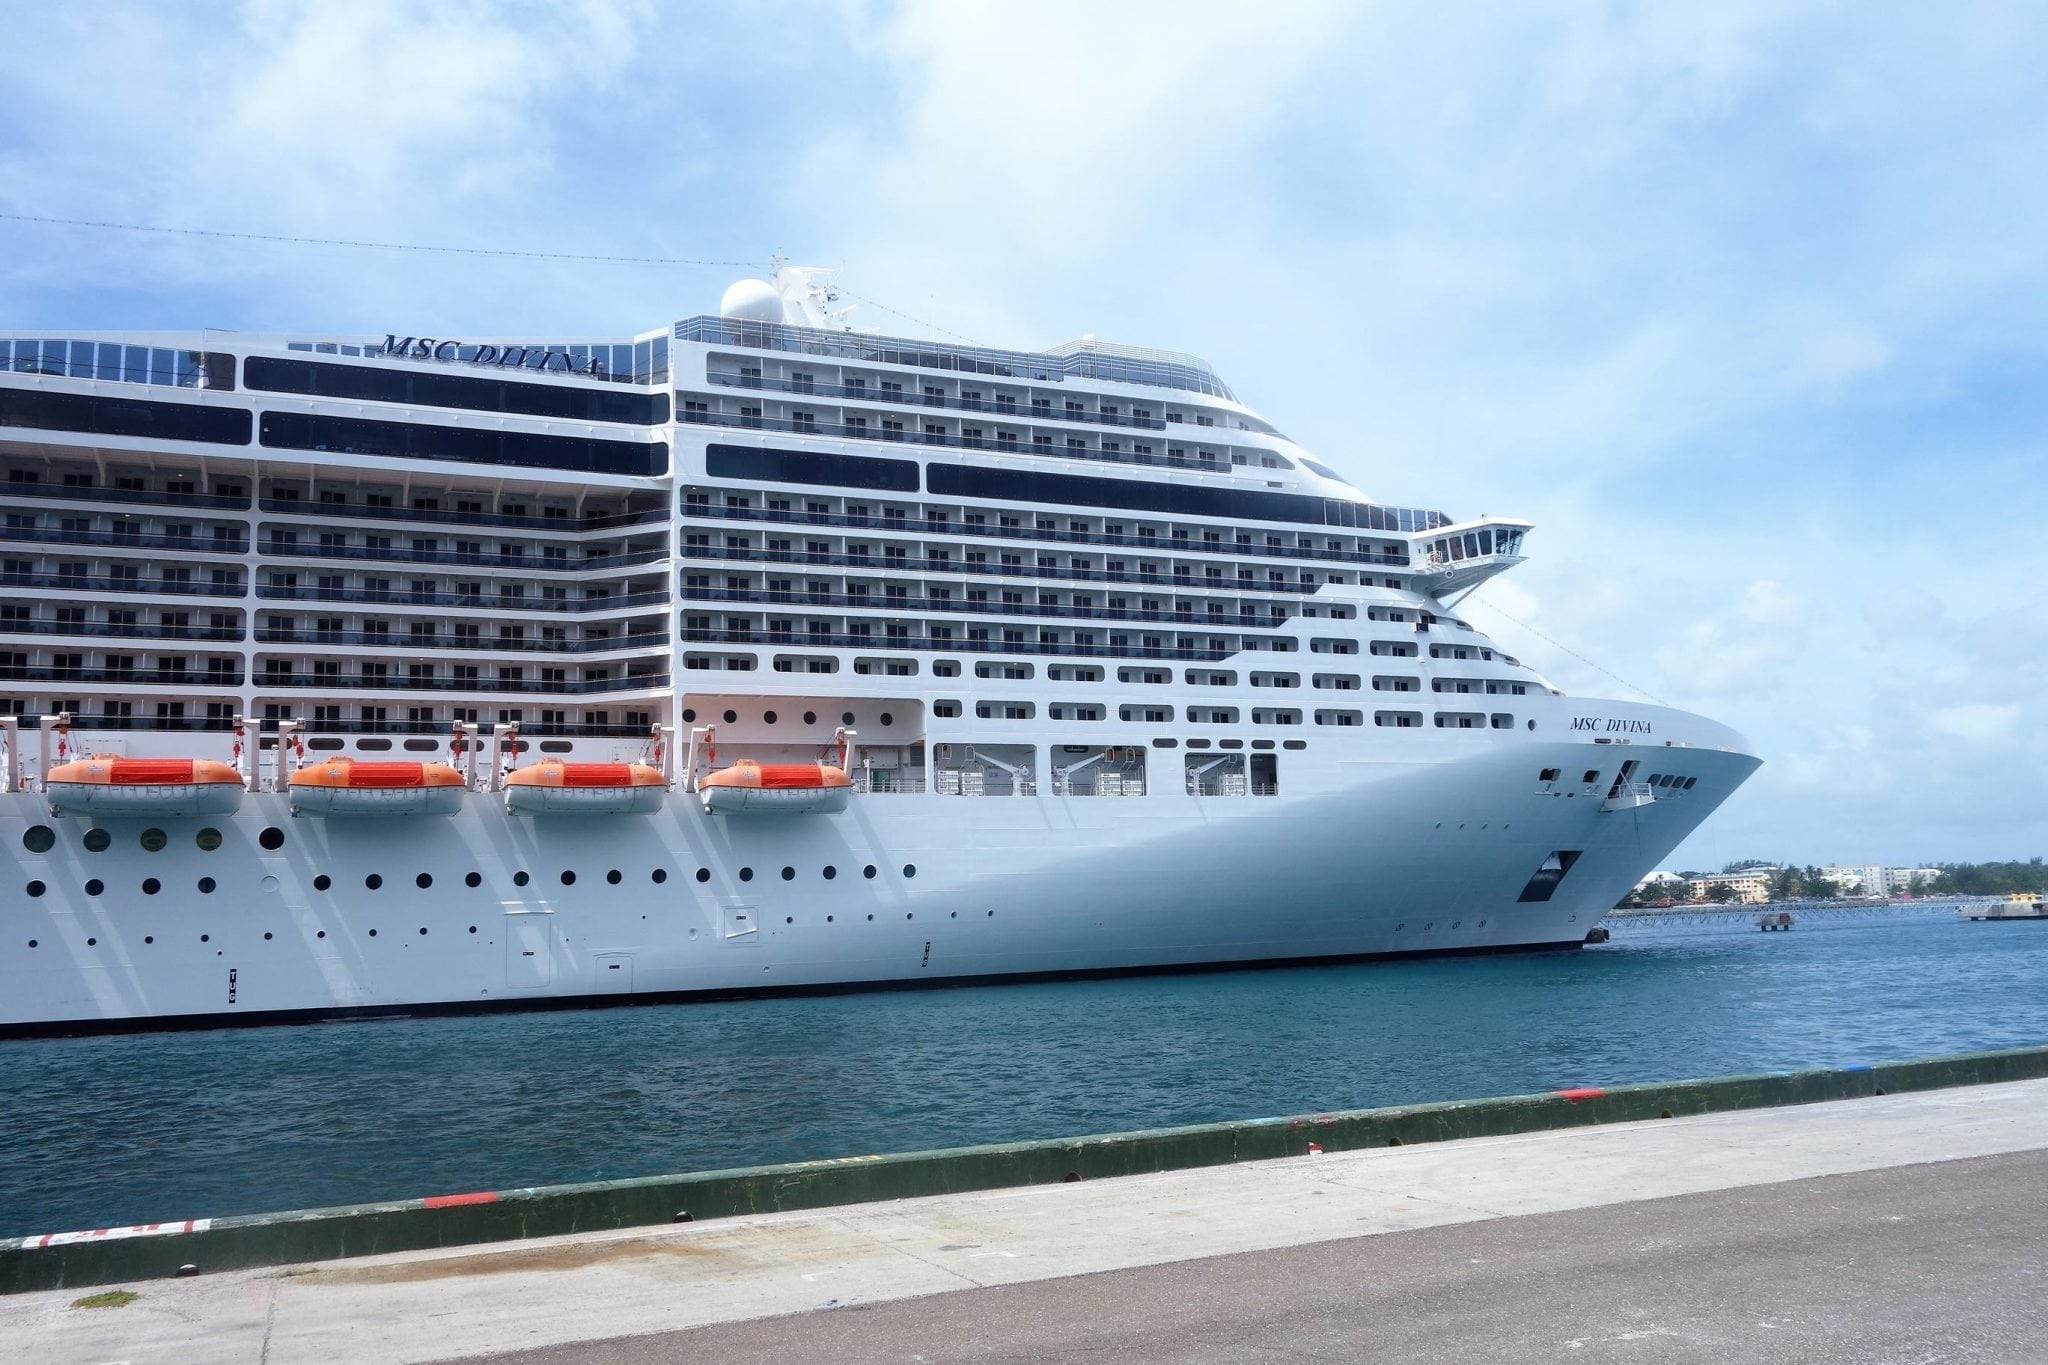 msc cruise ship divina